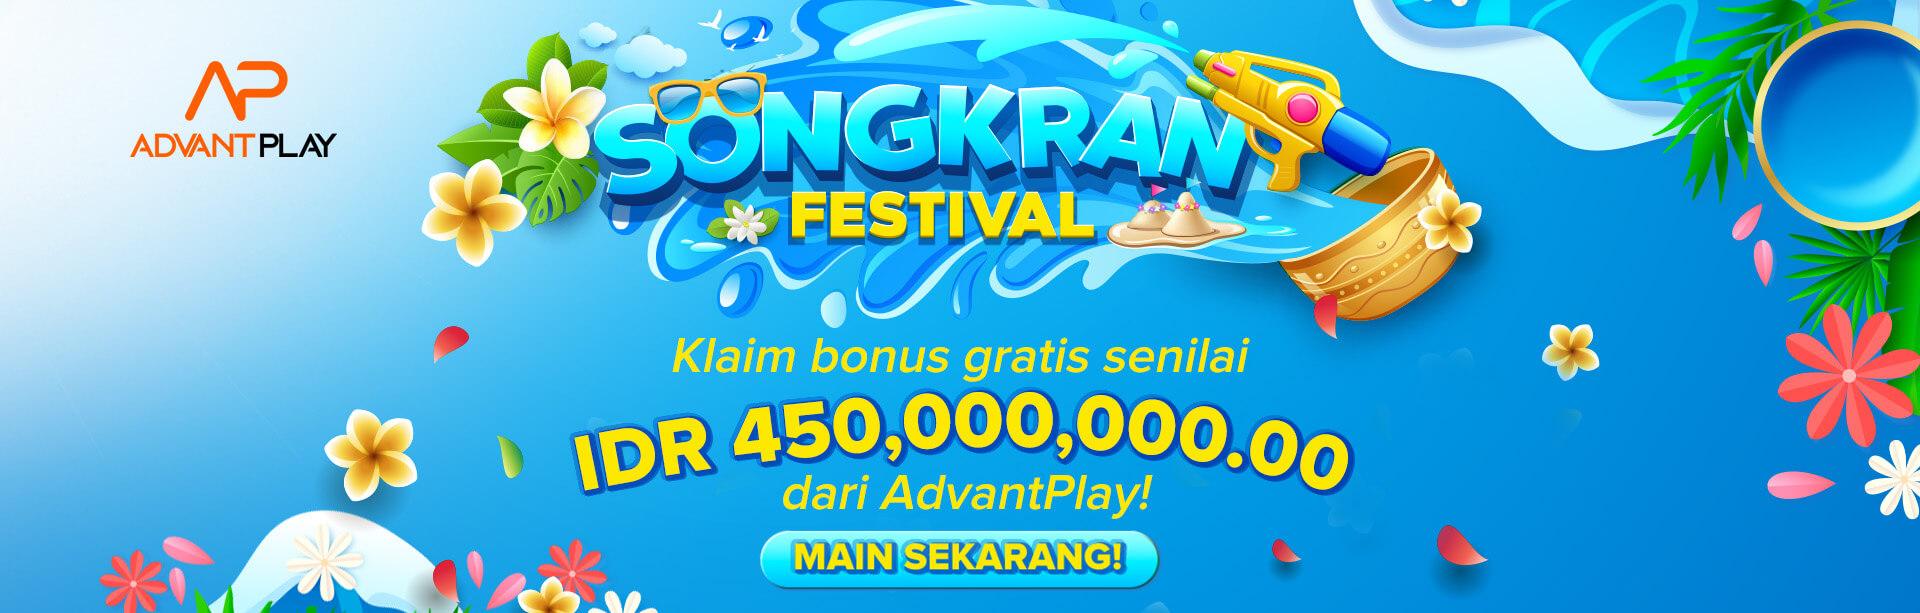 Advantplay Songkran Festival